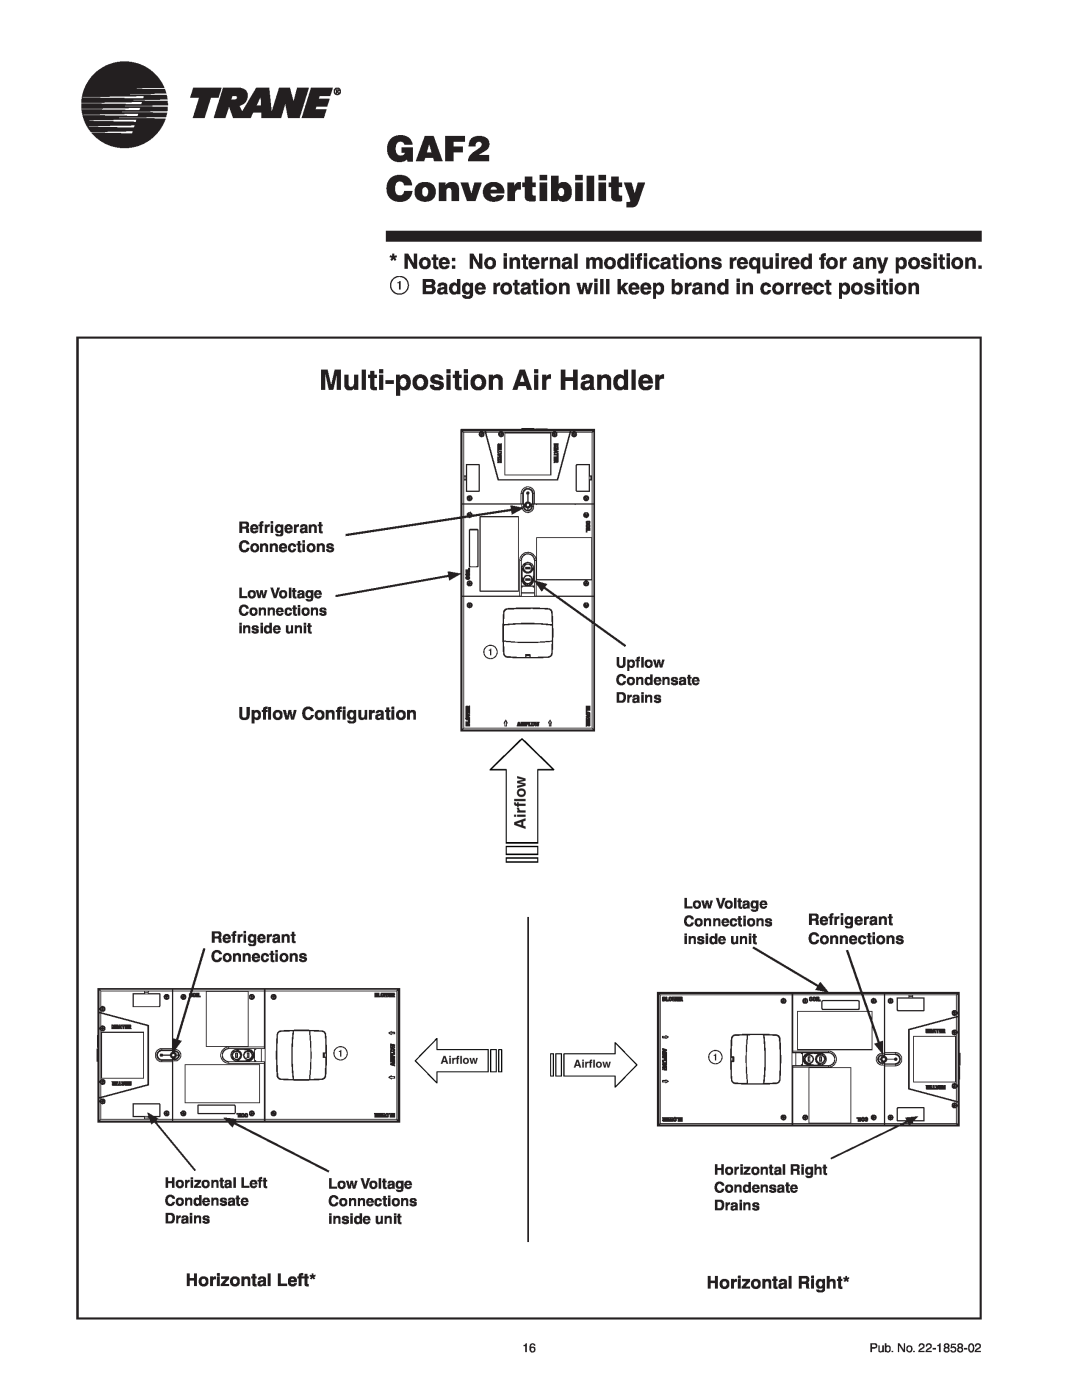 Trane GAF2A0A30S21SA, GAF2A0A24S21SA GAF2 Convertibility, Multi-positionAir Handler, Refrigerant, Connections, Airflow 